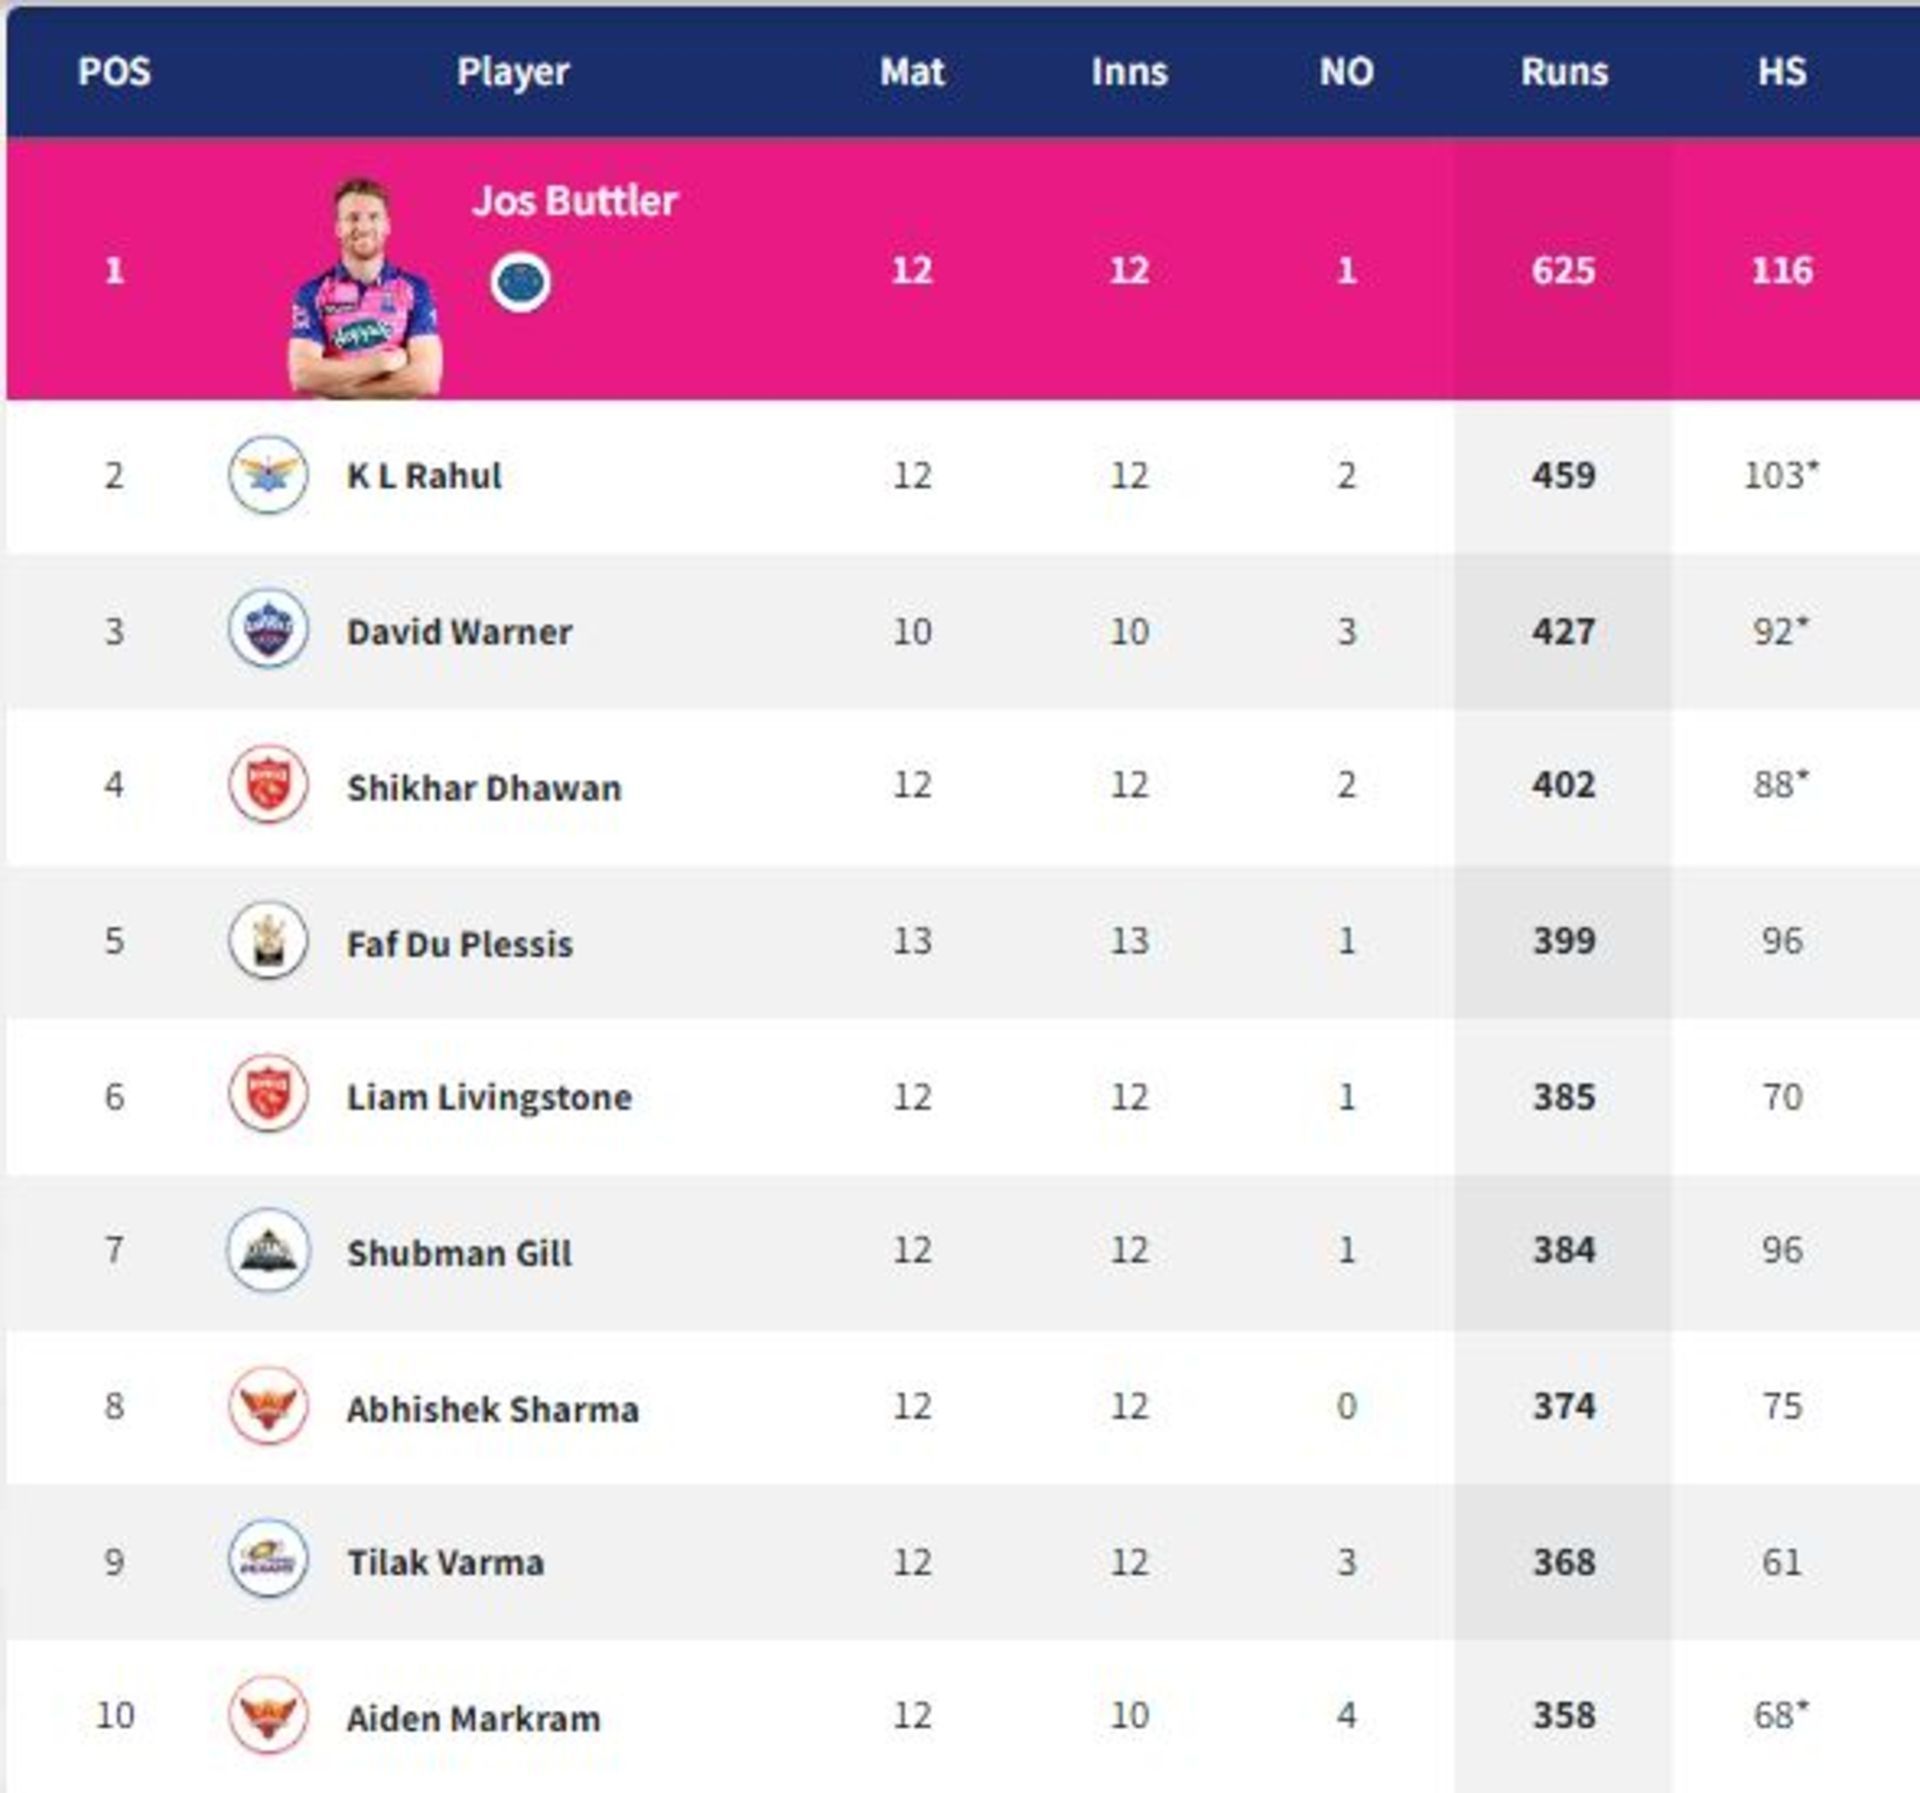 Abhishek Sharma piped Varma to be top scorer among uncapped players (PC: IPLT20.com)